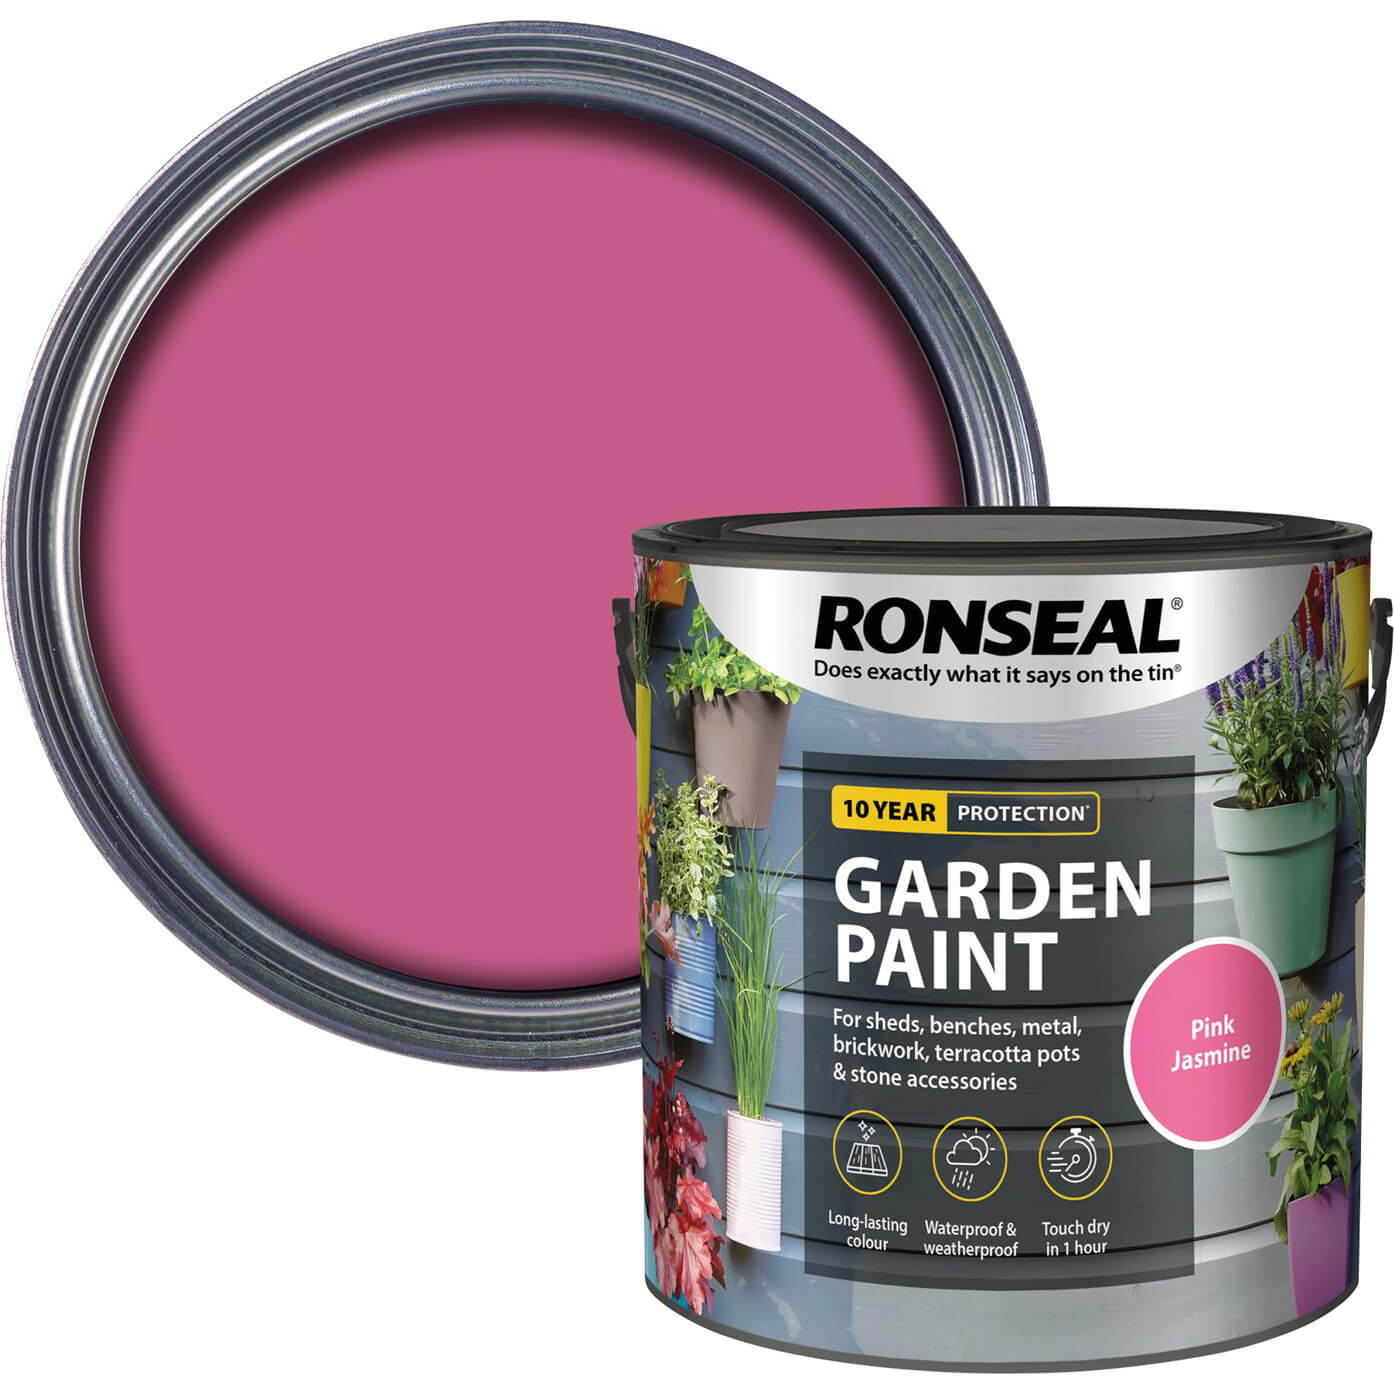 Image of Ronseal General Purpose Garden Paint Pink Jasmine 2.5l